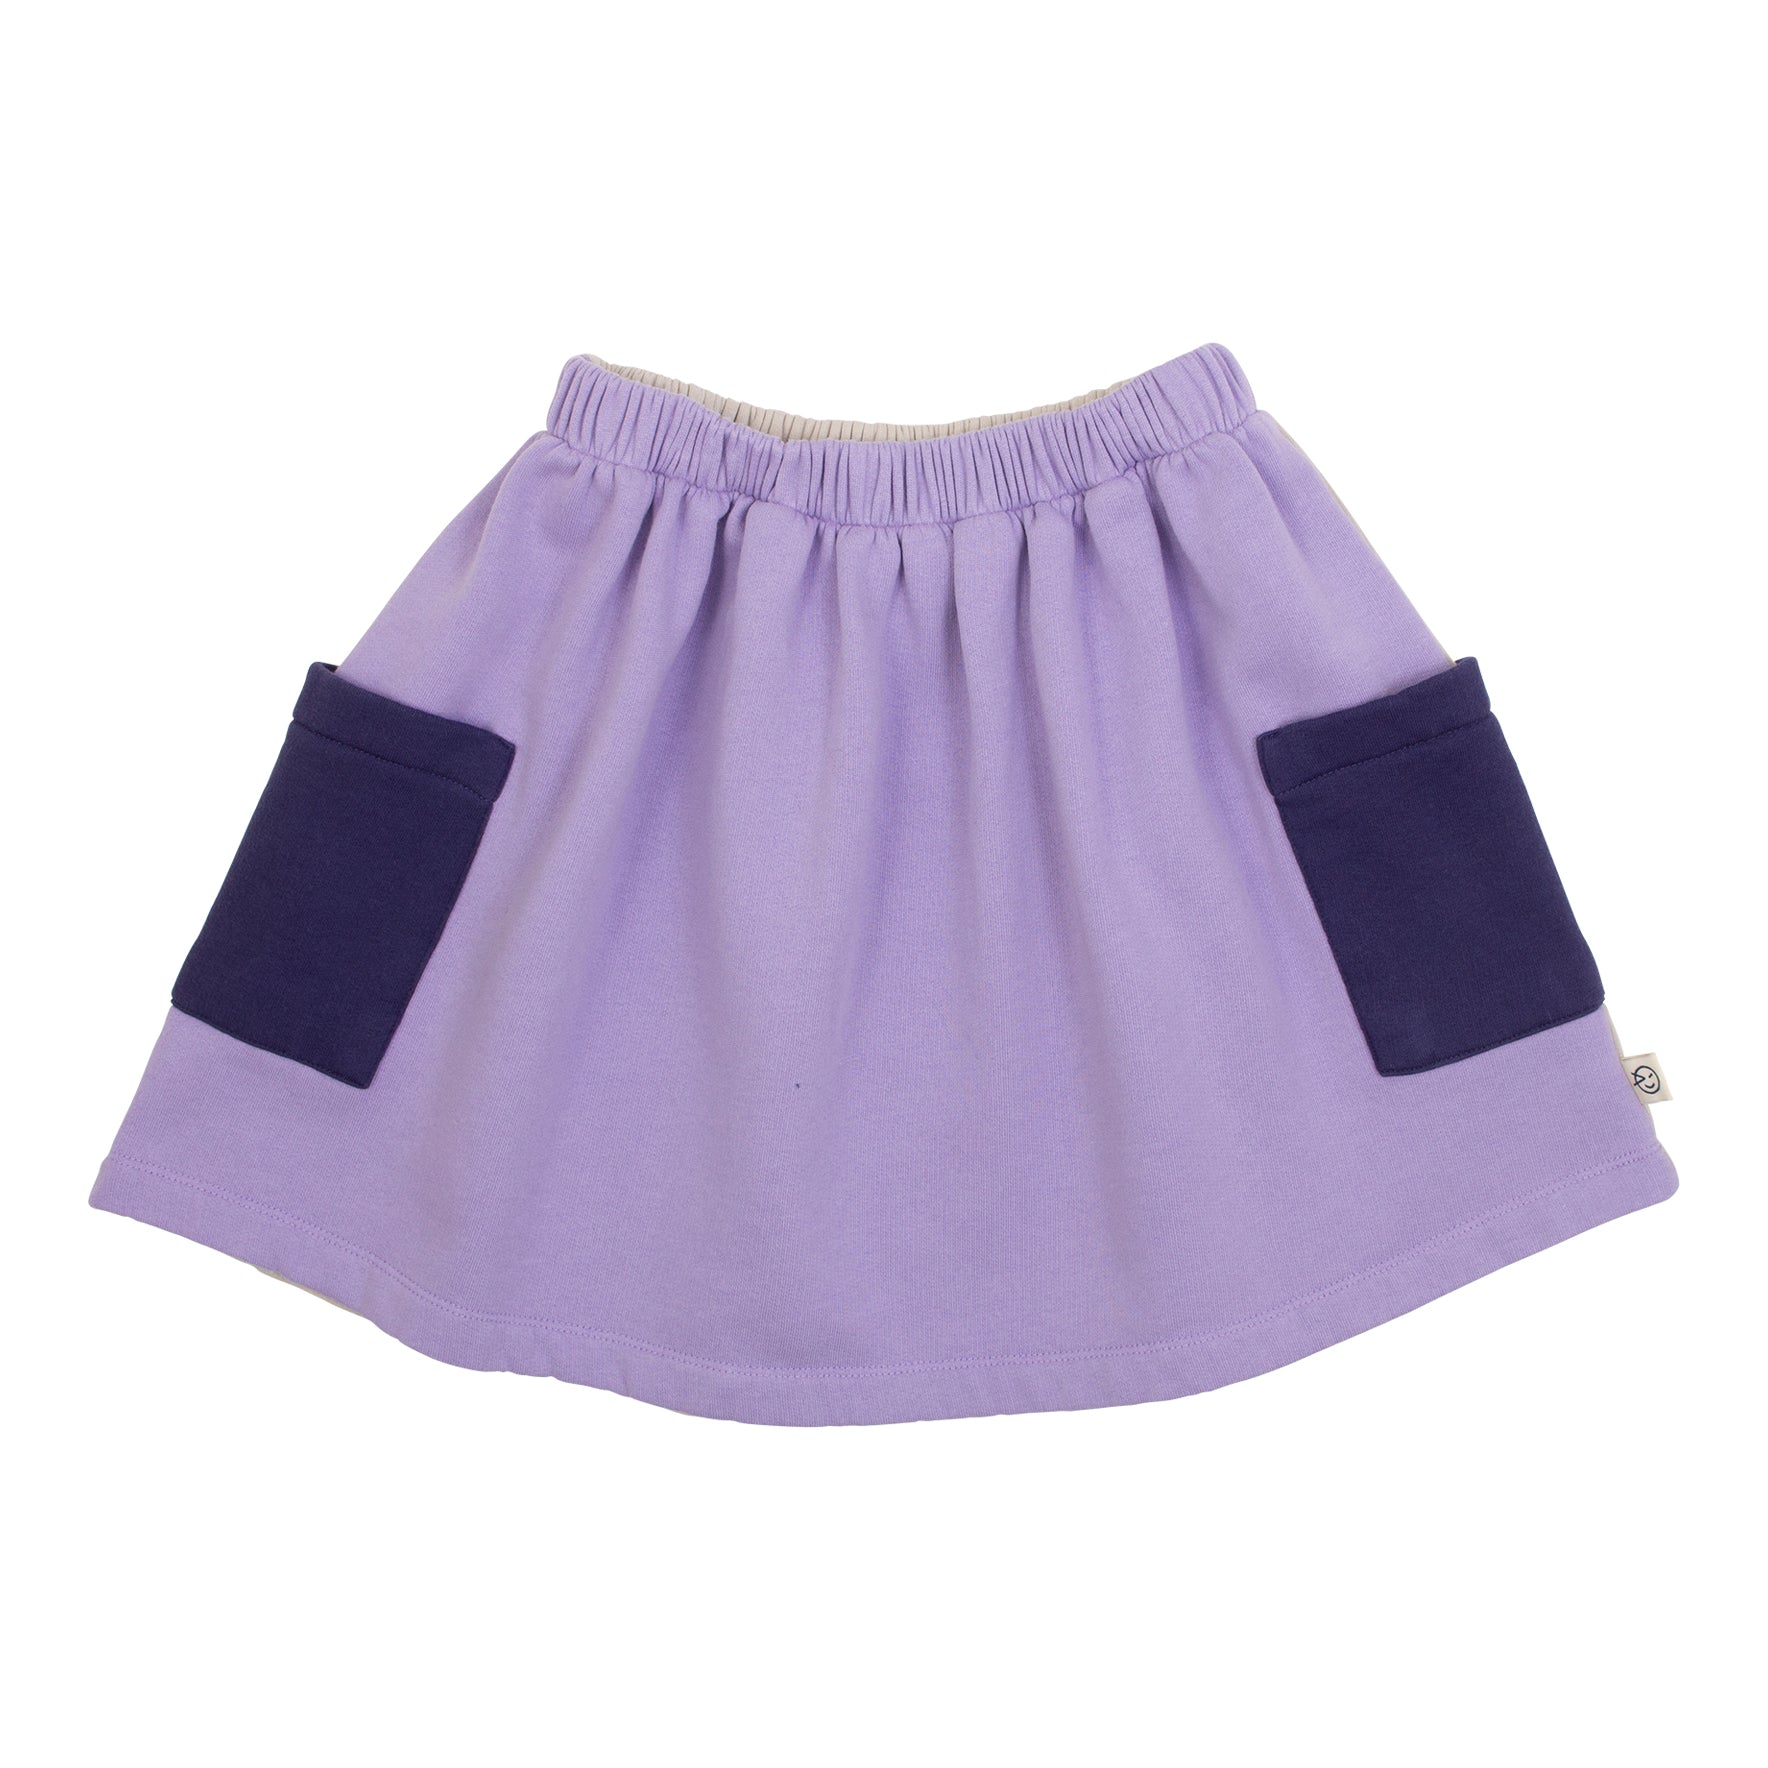 Panel Pocket Skirt - Lilac / Cool Grey / Navy